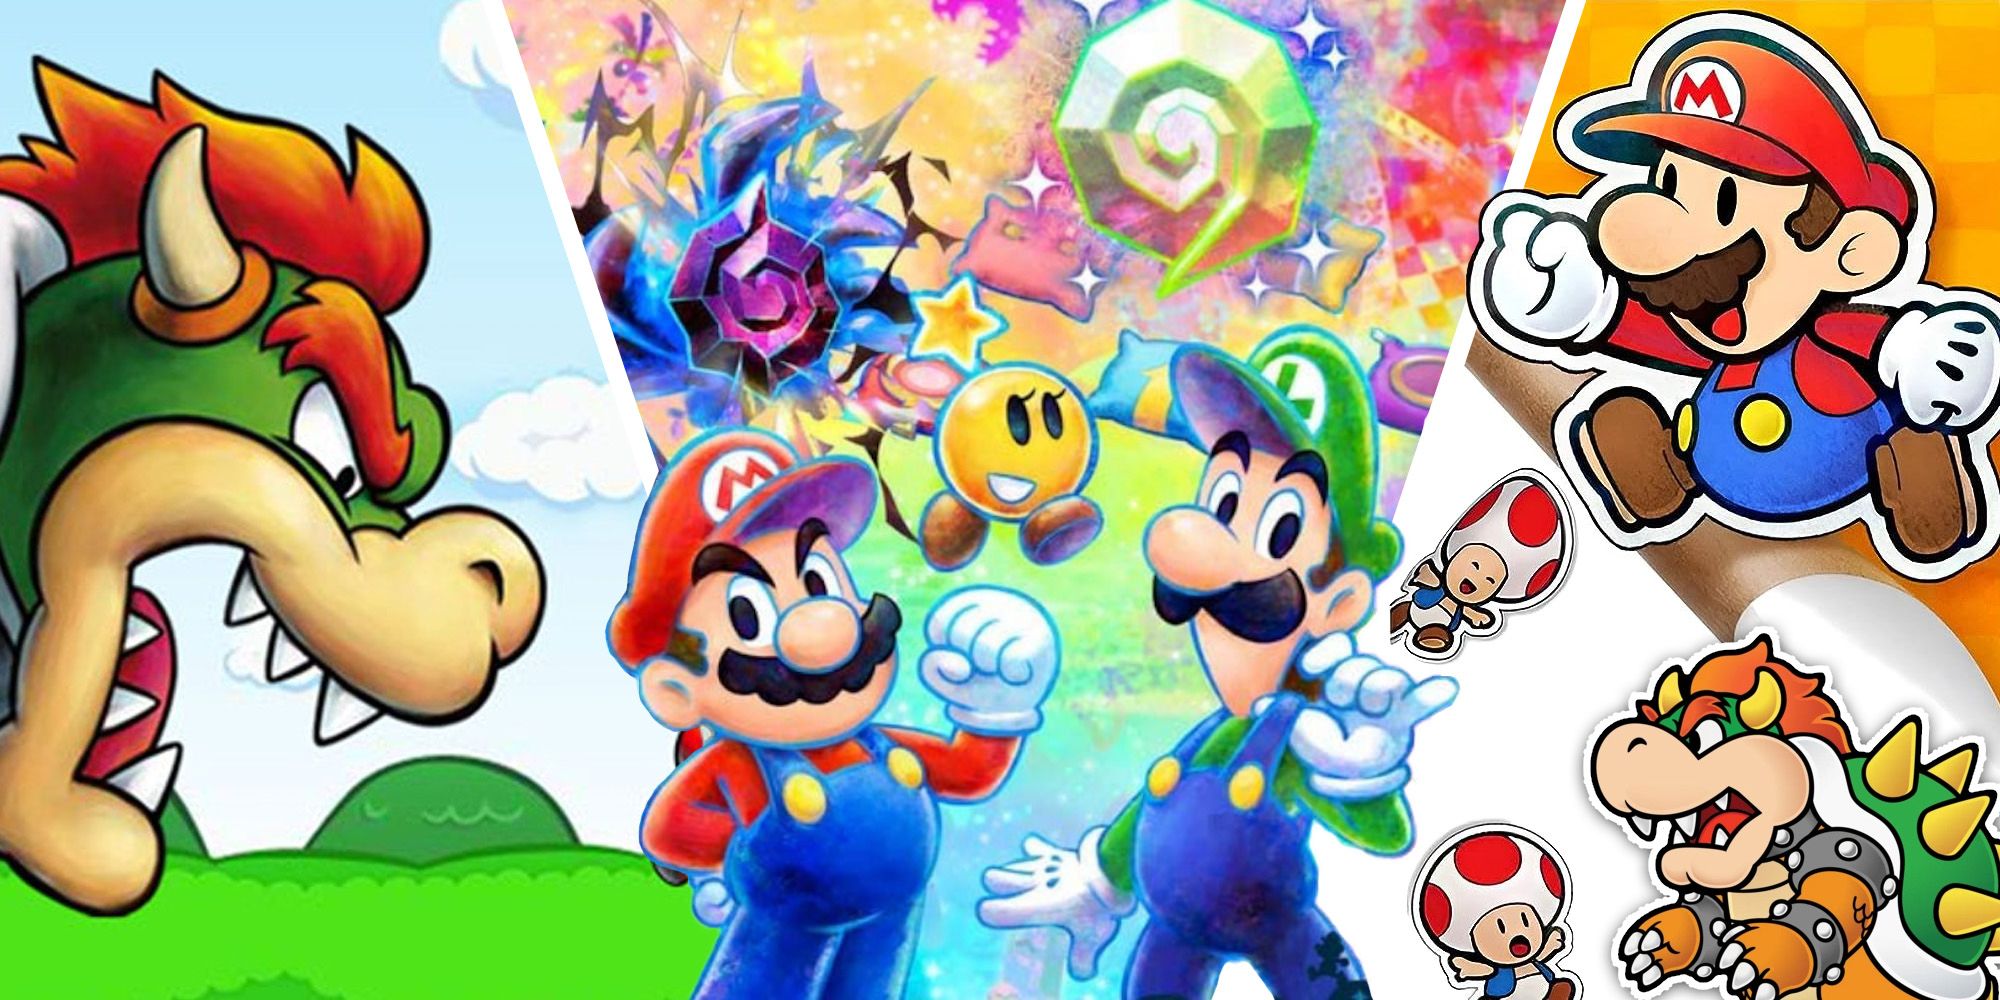 Best Mario & Luigi Games - Split Image Of Bowser, Mario, Luigi, Starlow, Paper Mario, Paper Toad, And Paper Bowser